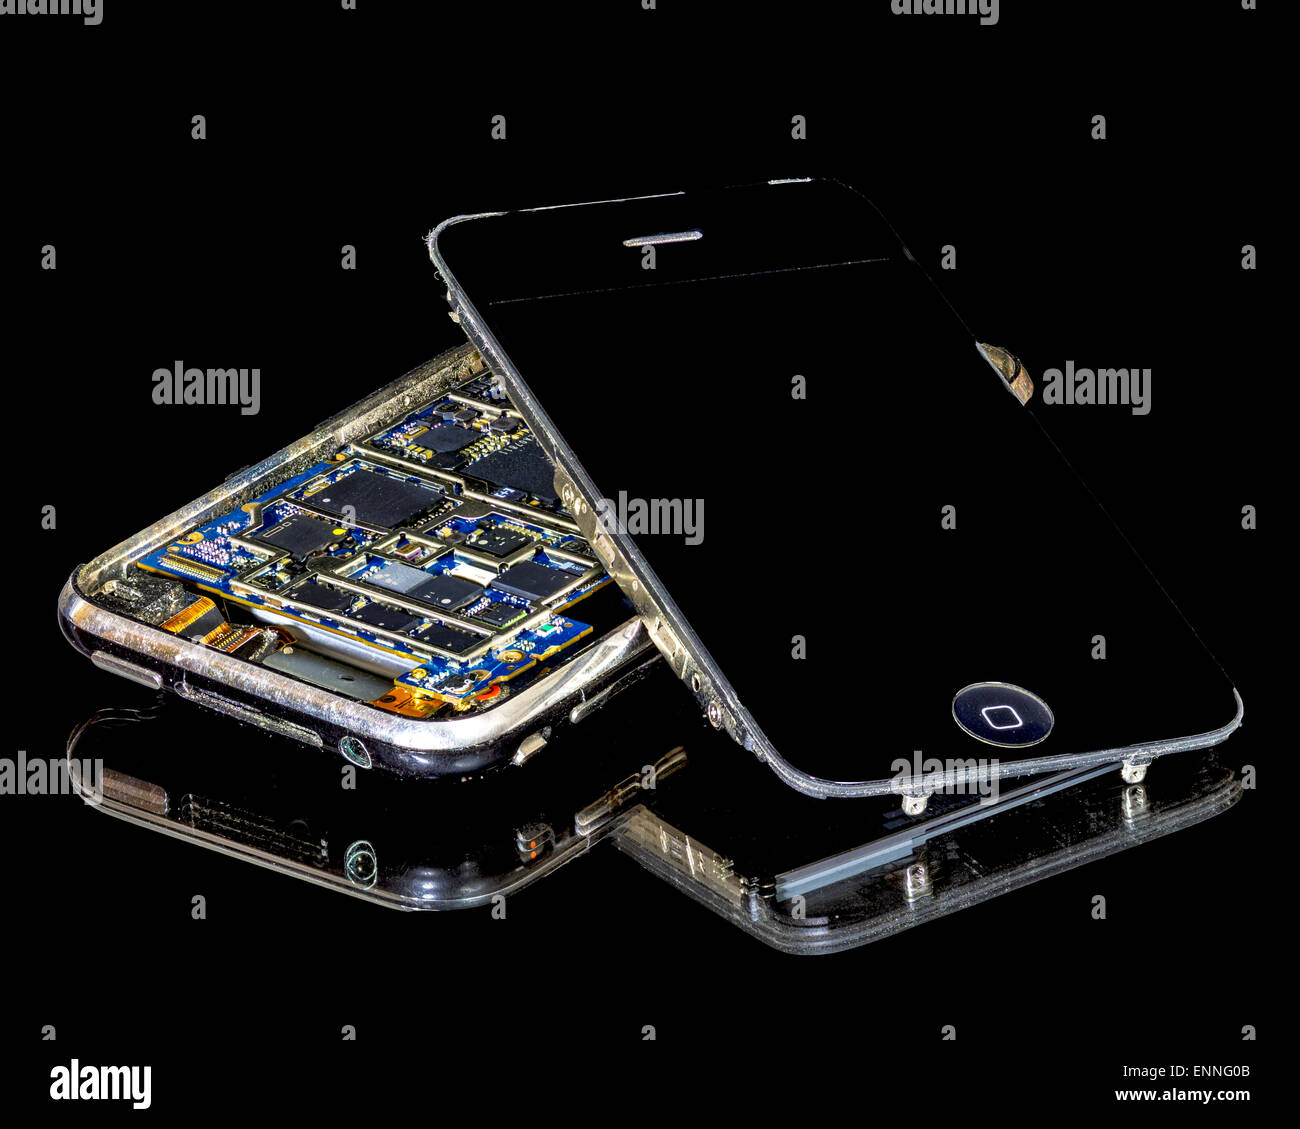 Smart phone opened up and exposing electronics Stock Photo